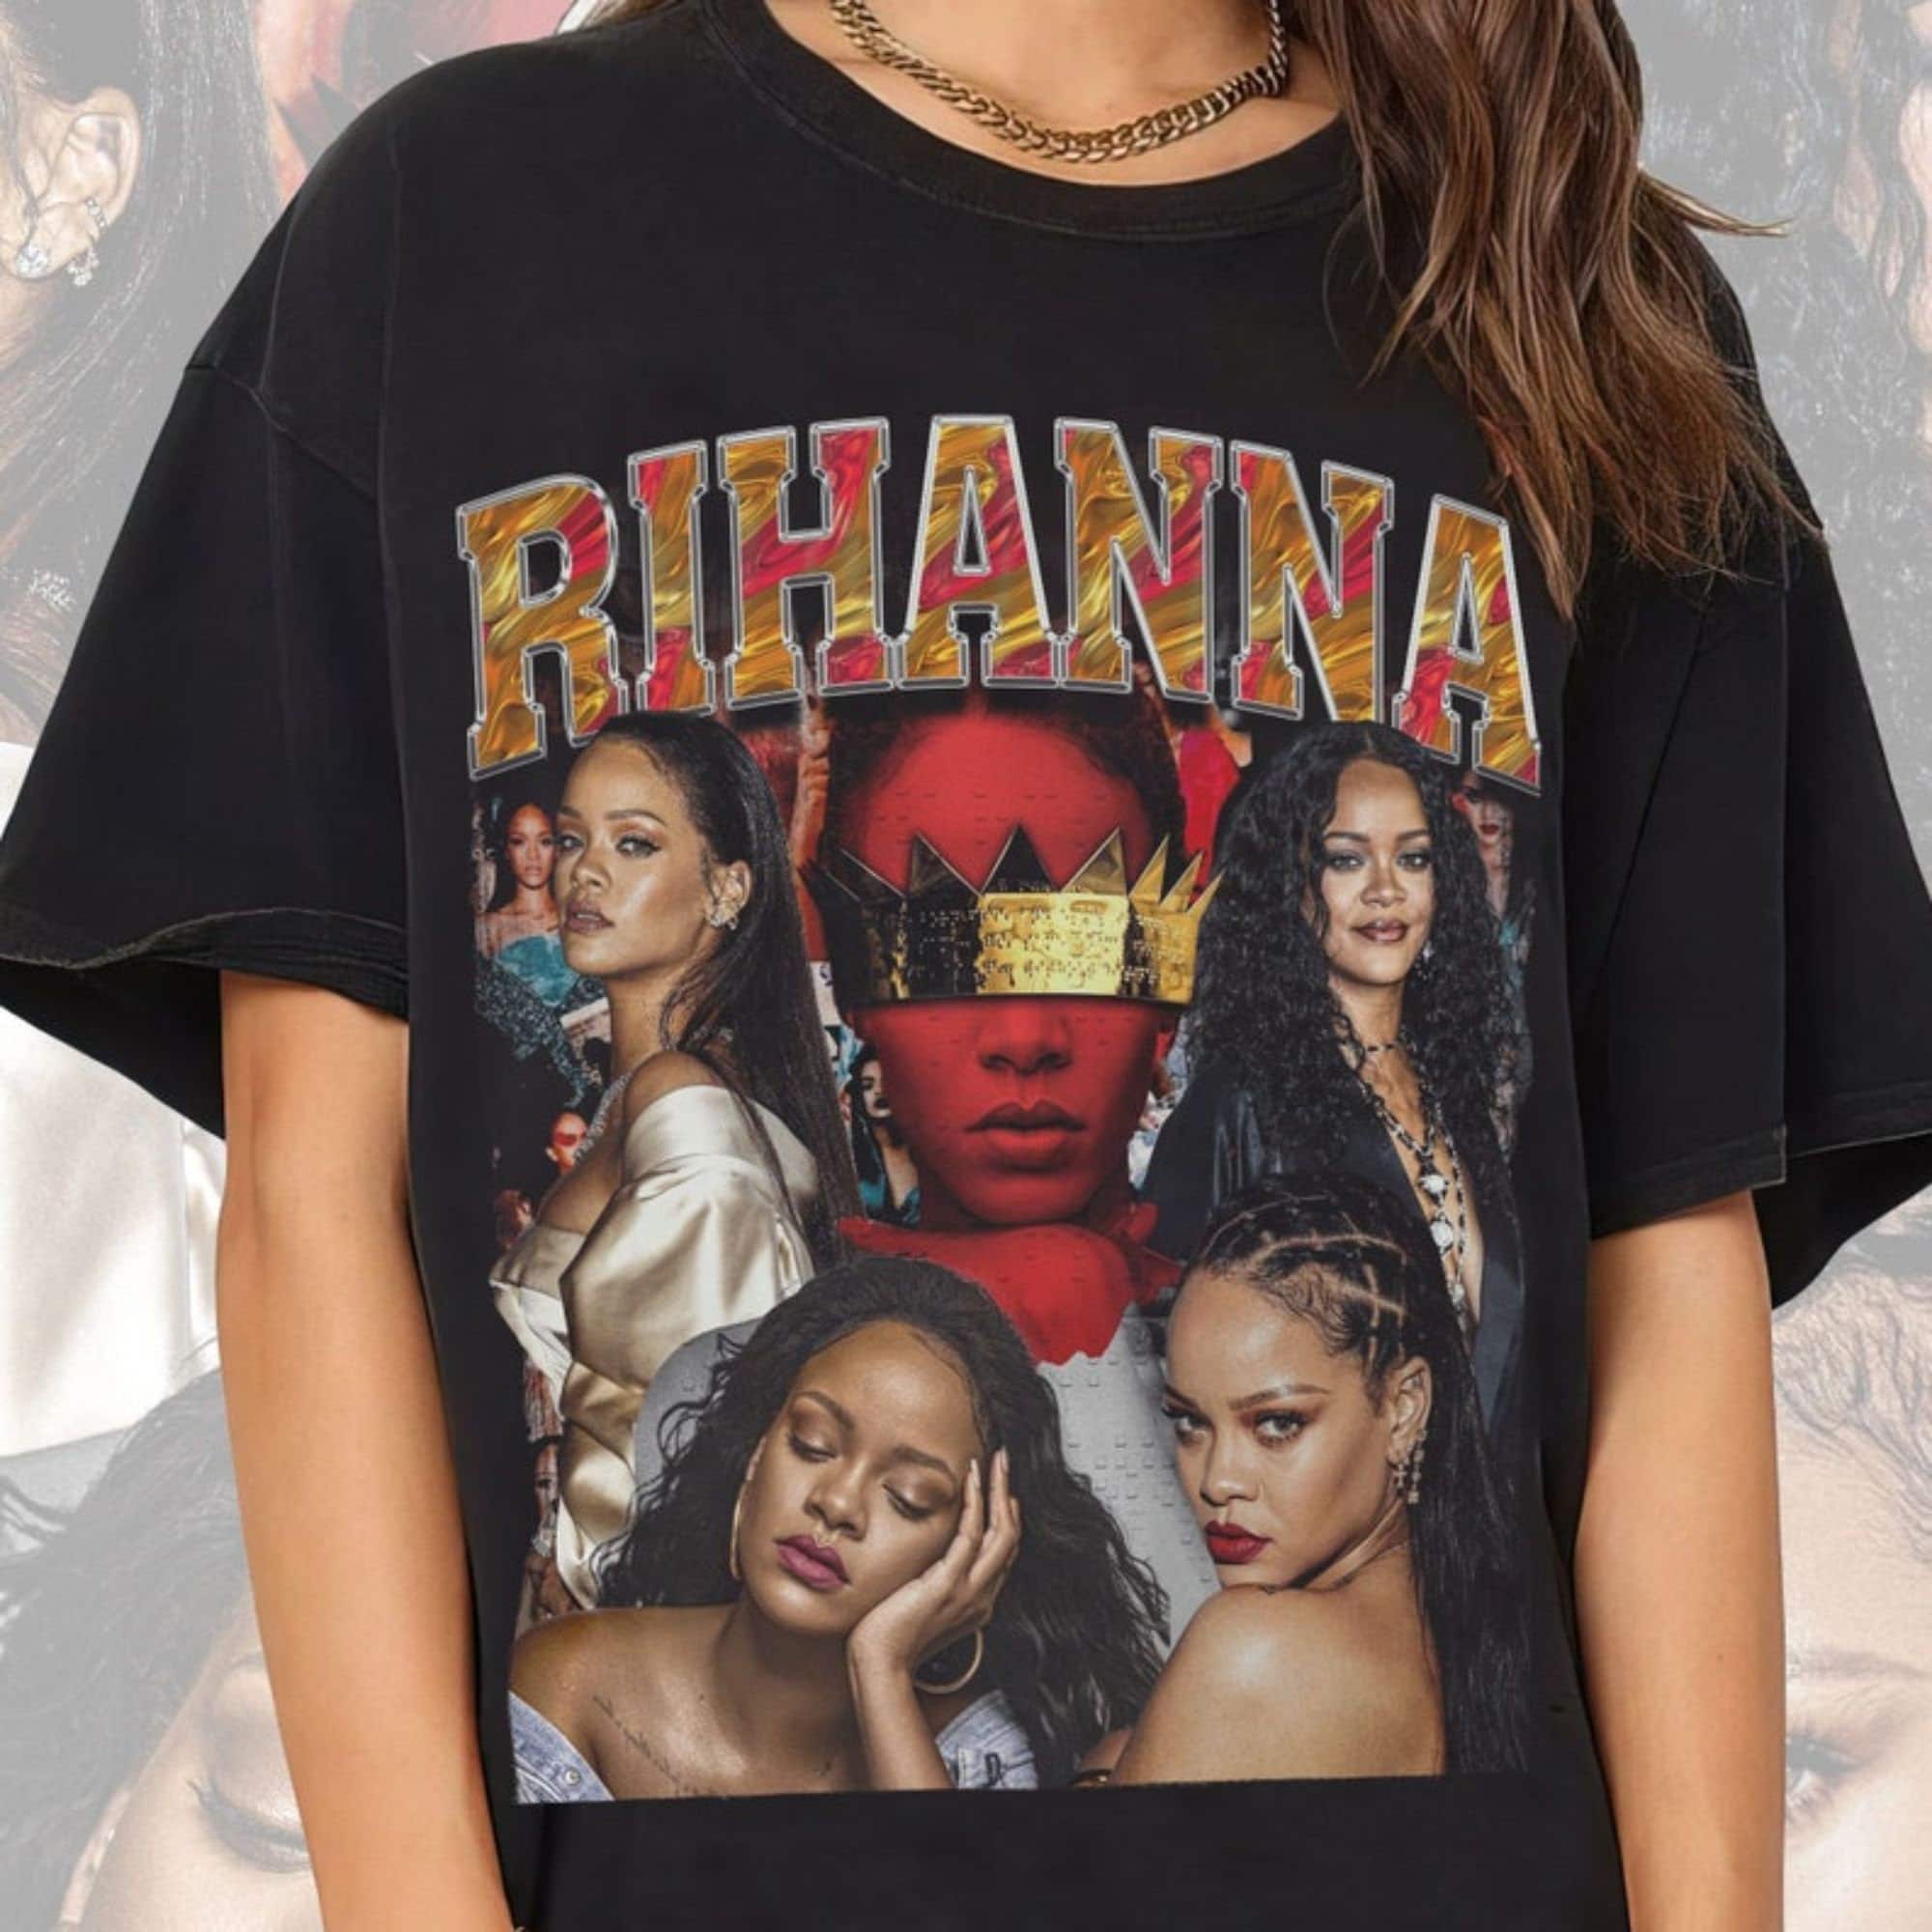 Discover Rihanna 90s Vintage Graphic Tshirt - Rihanna Vintage Graphic Tee